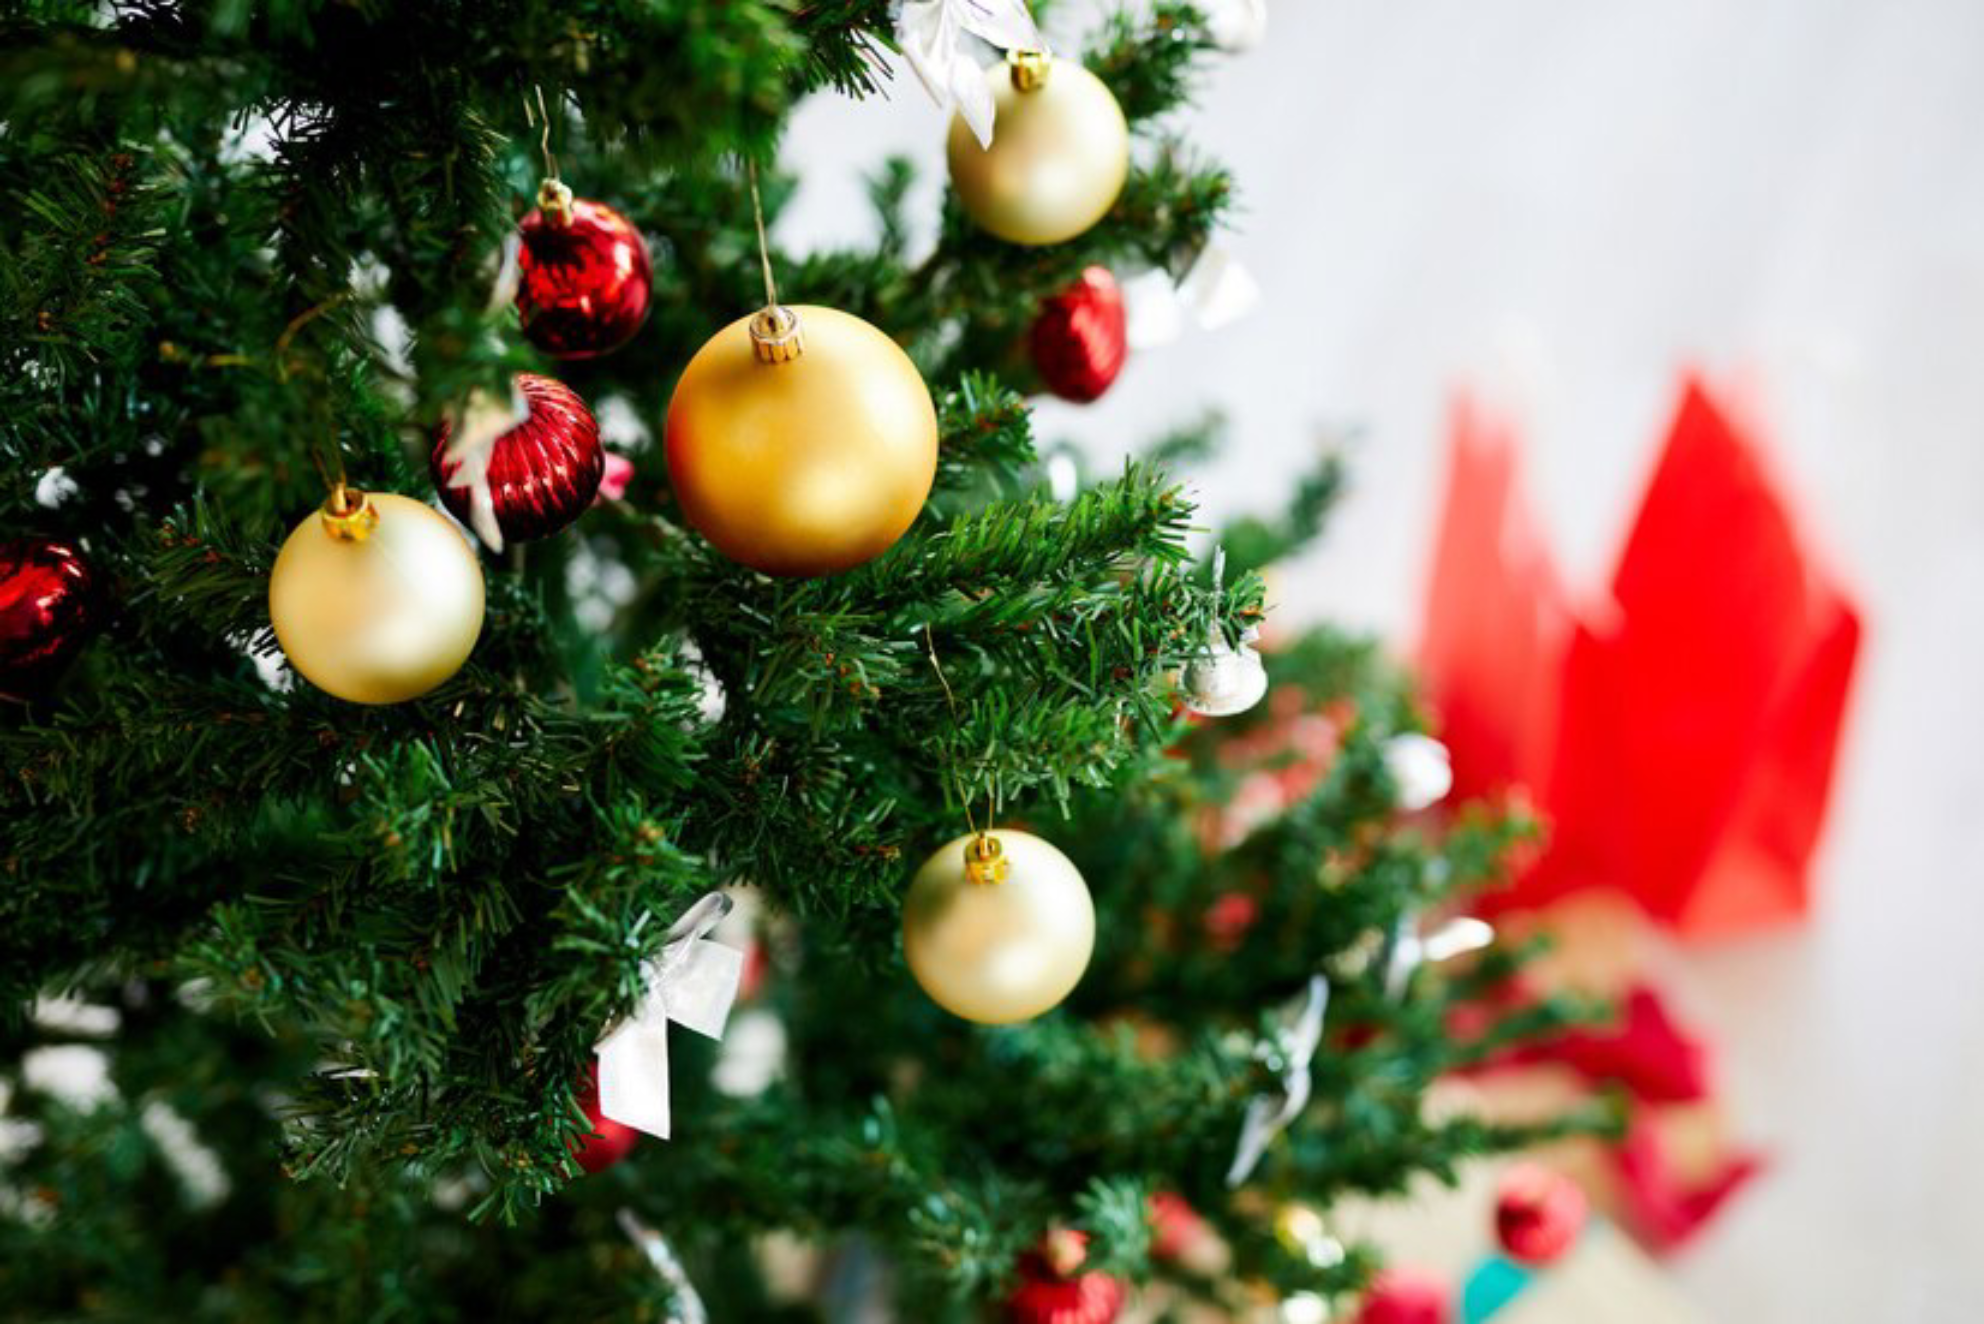 Preparing Christmas Ornaments to Decorate Christmas Tree